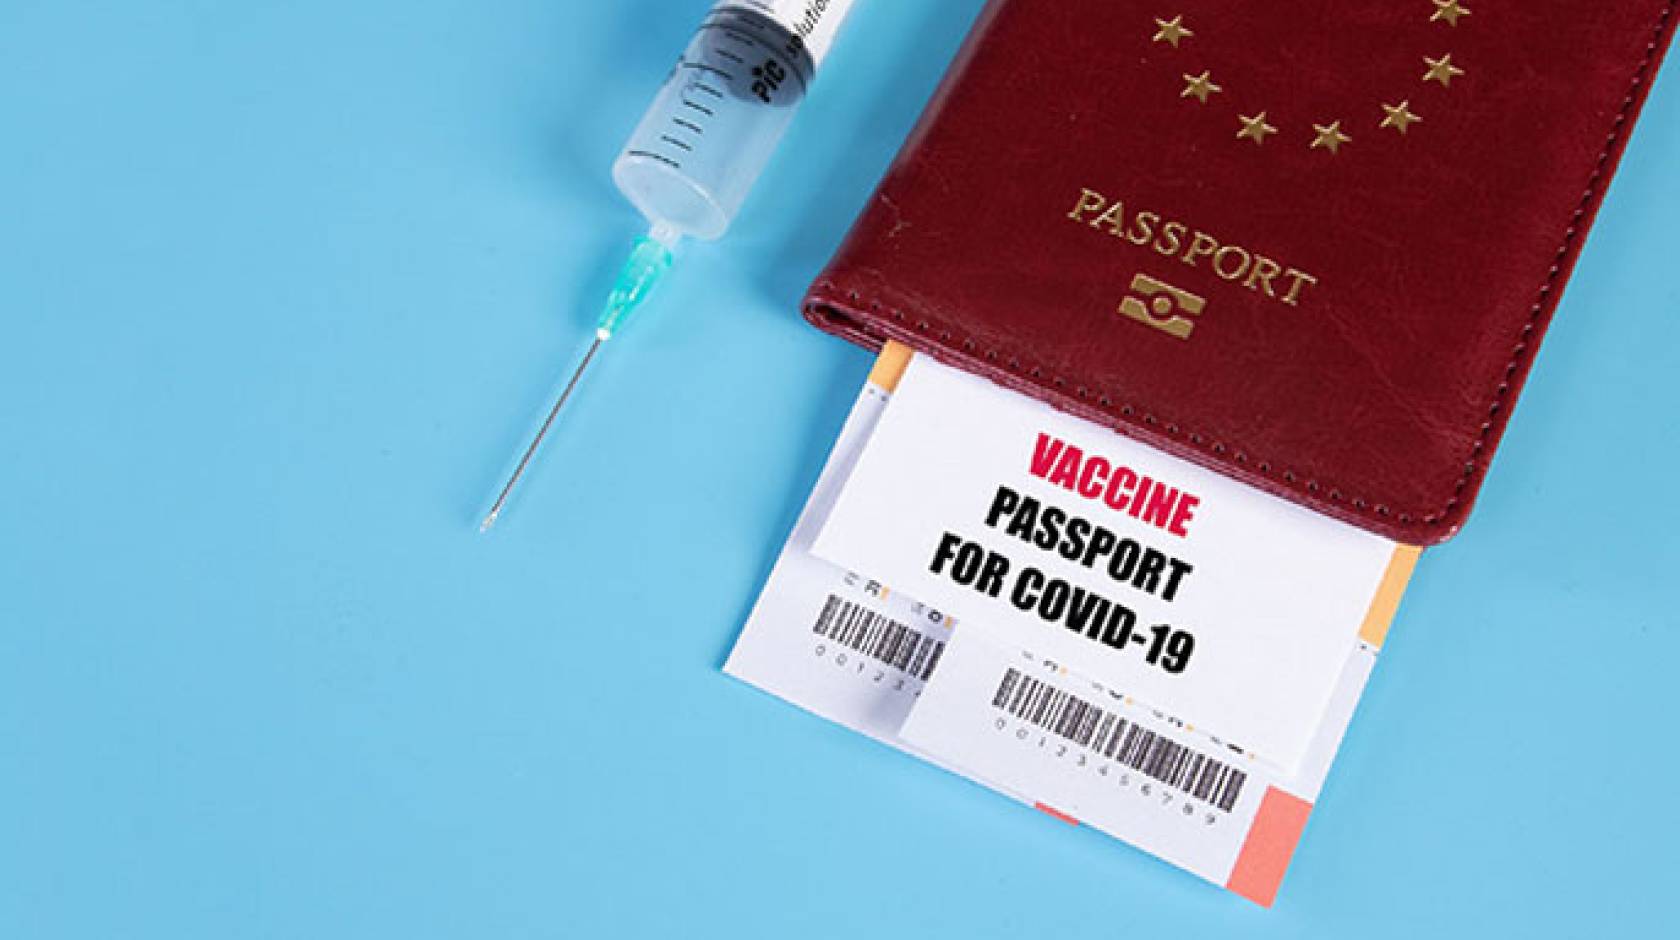 Passport next to a syringe